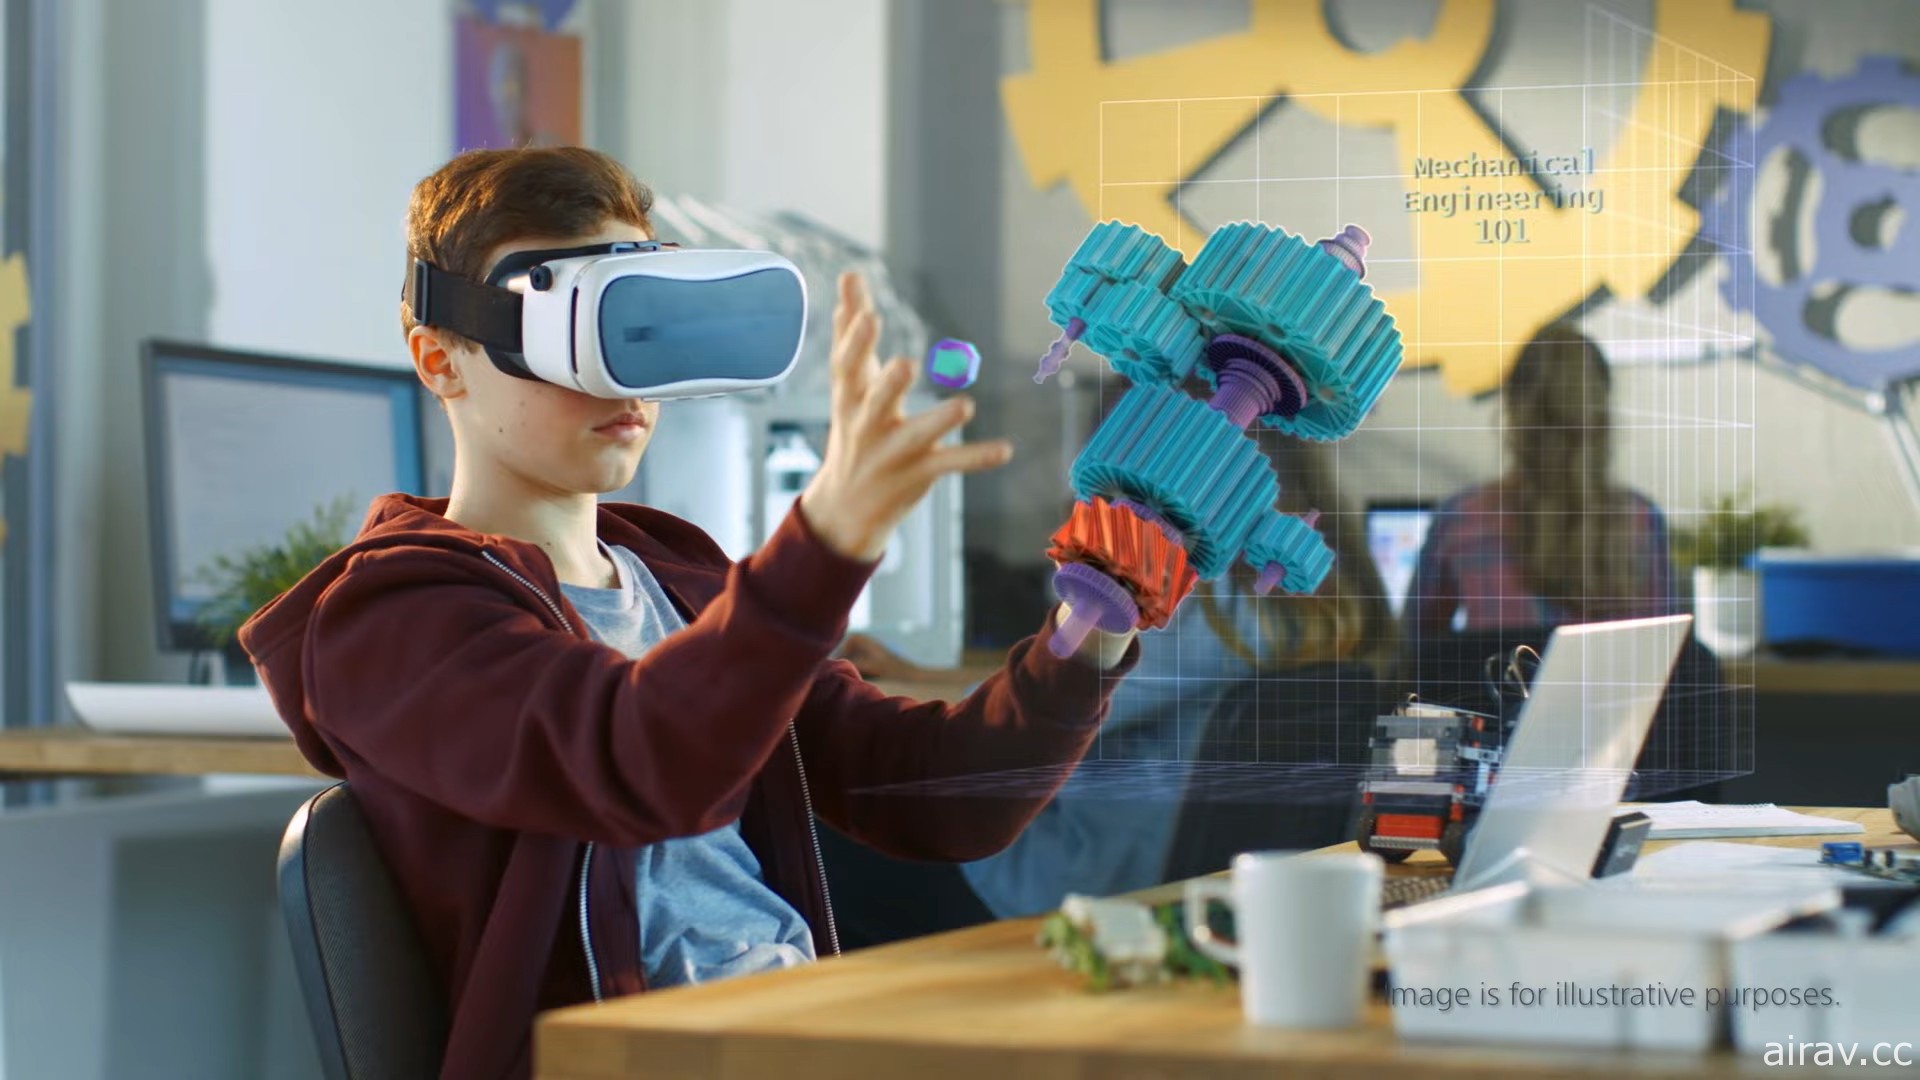 替下一代 PS VR 鋪路？Sony 展示 8K 解析度低延遲 VR 頭戴裝置研發成果